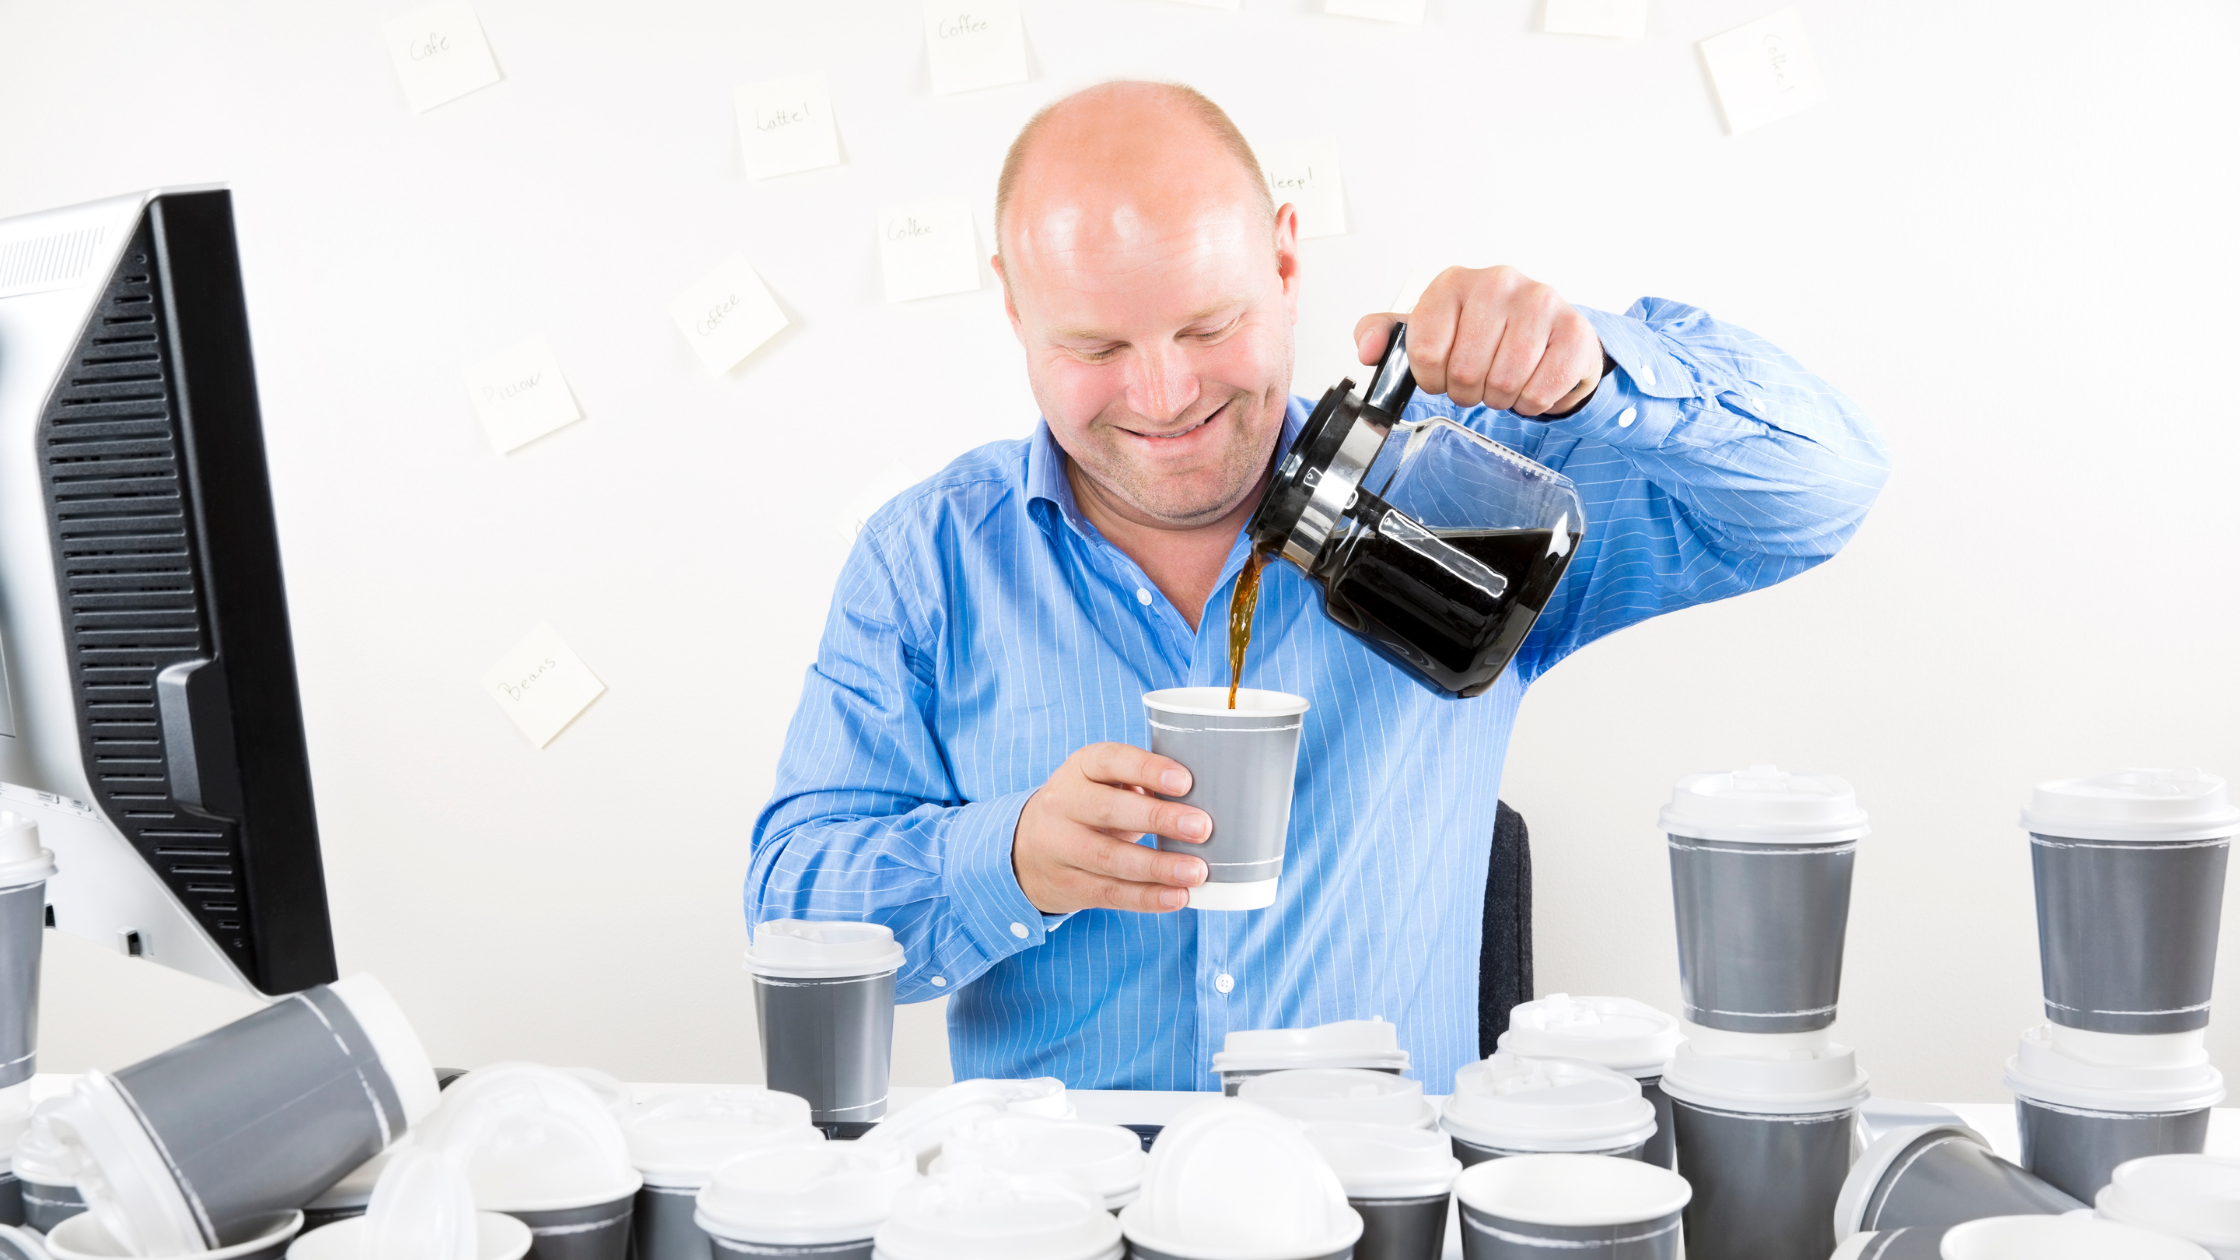 how much caffeine is too much?